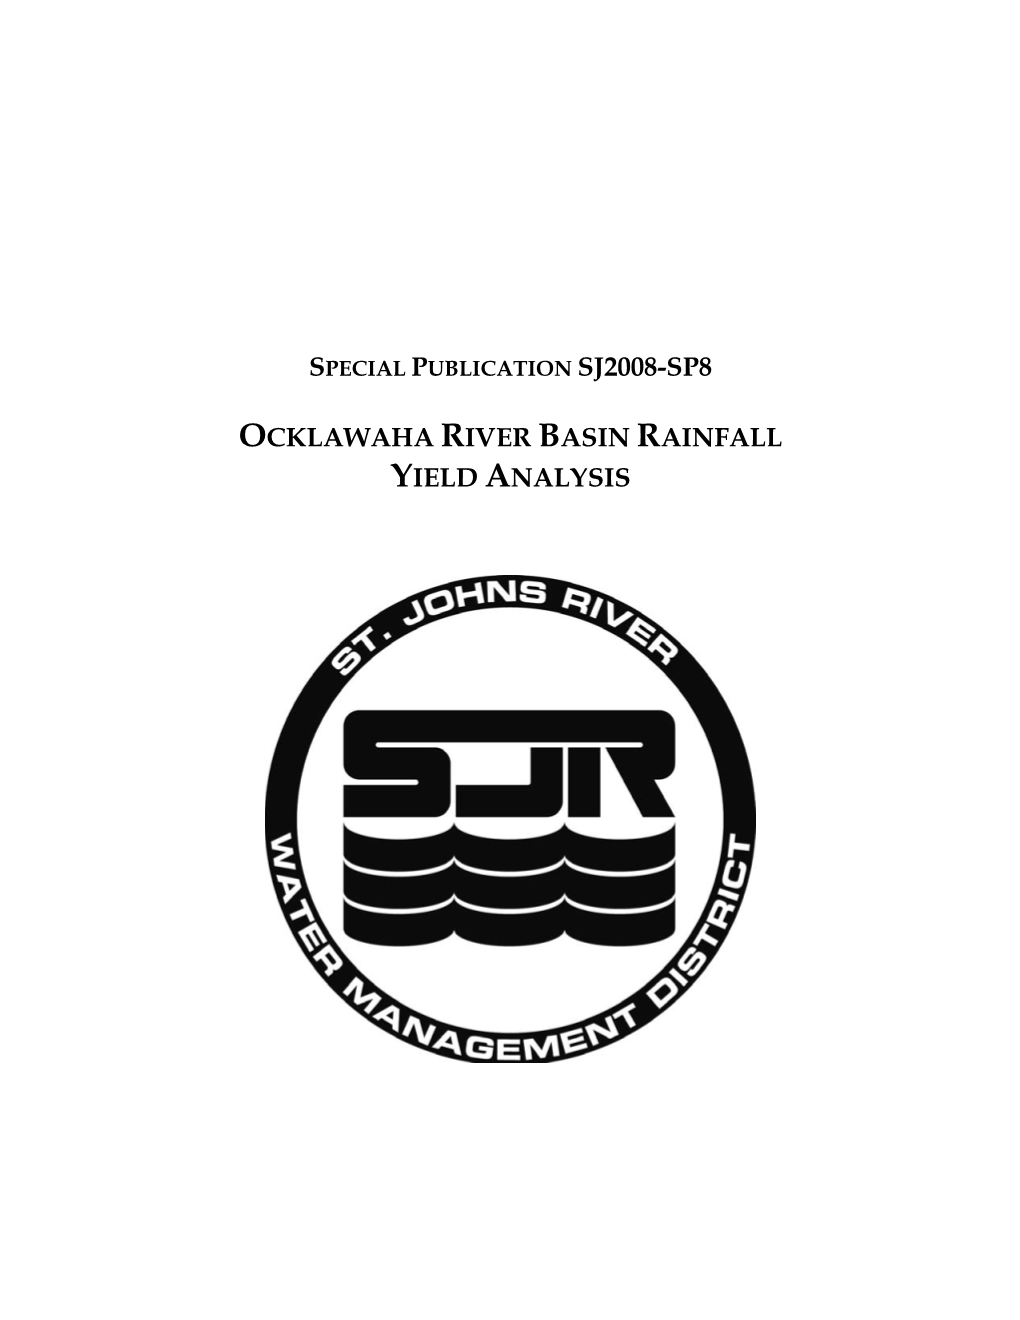 Ocklawaha River Basin Rainfall Yield Analysis